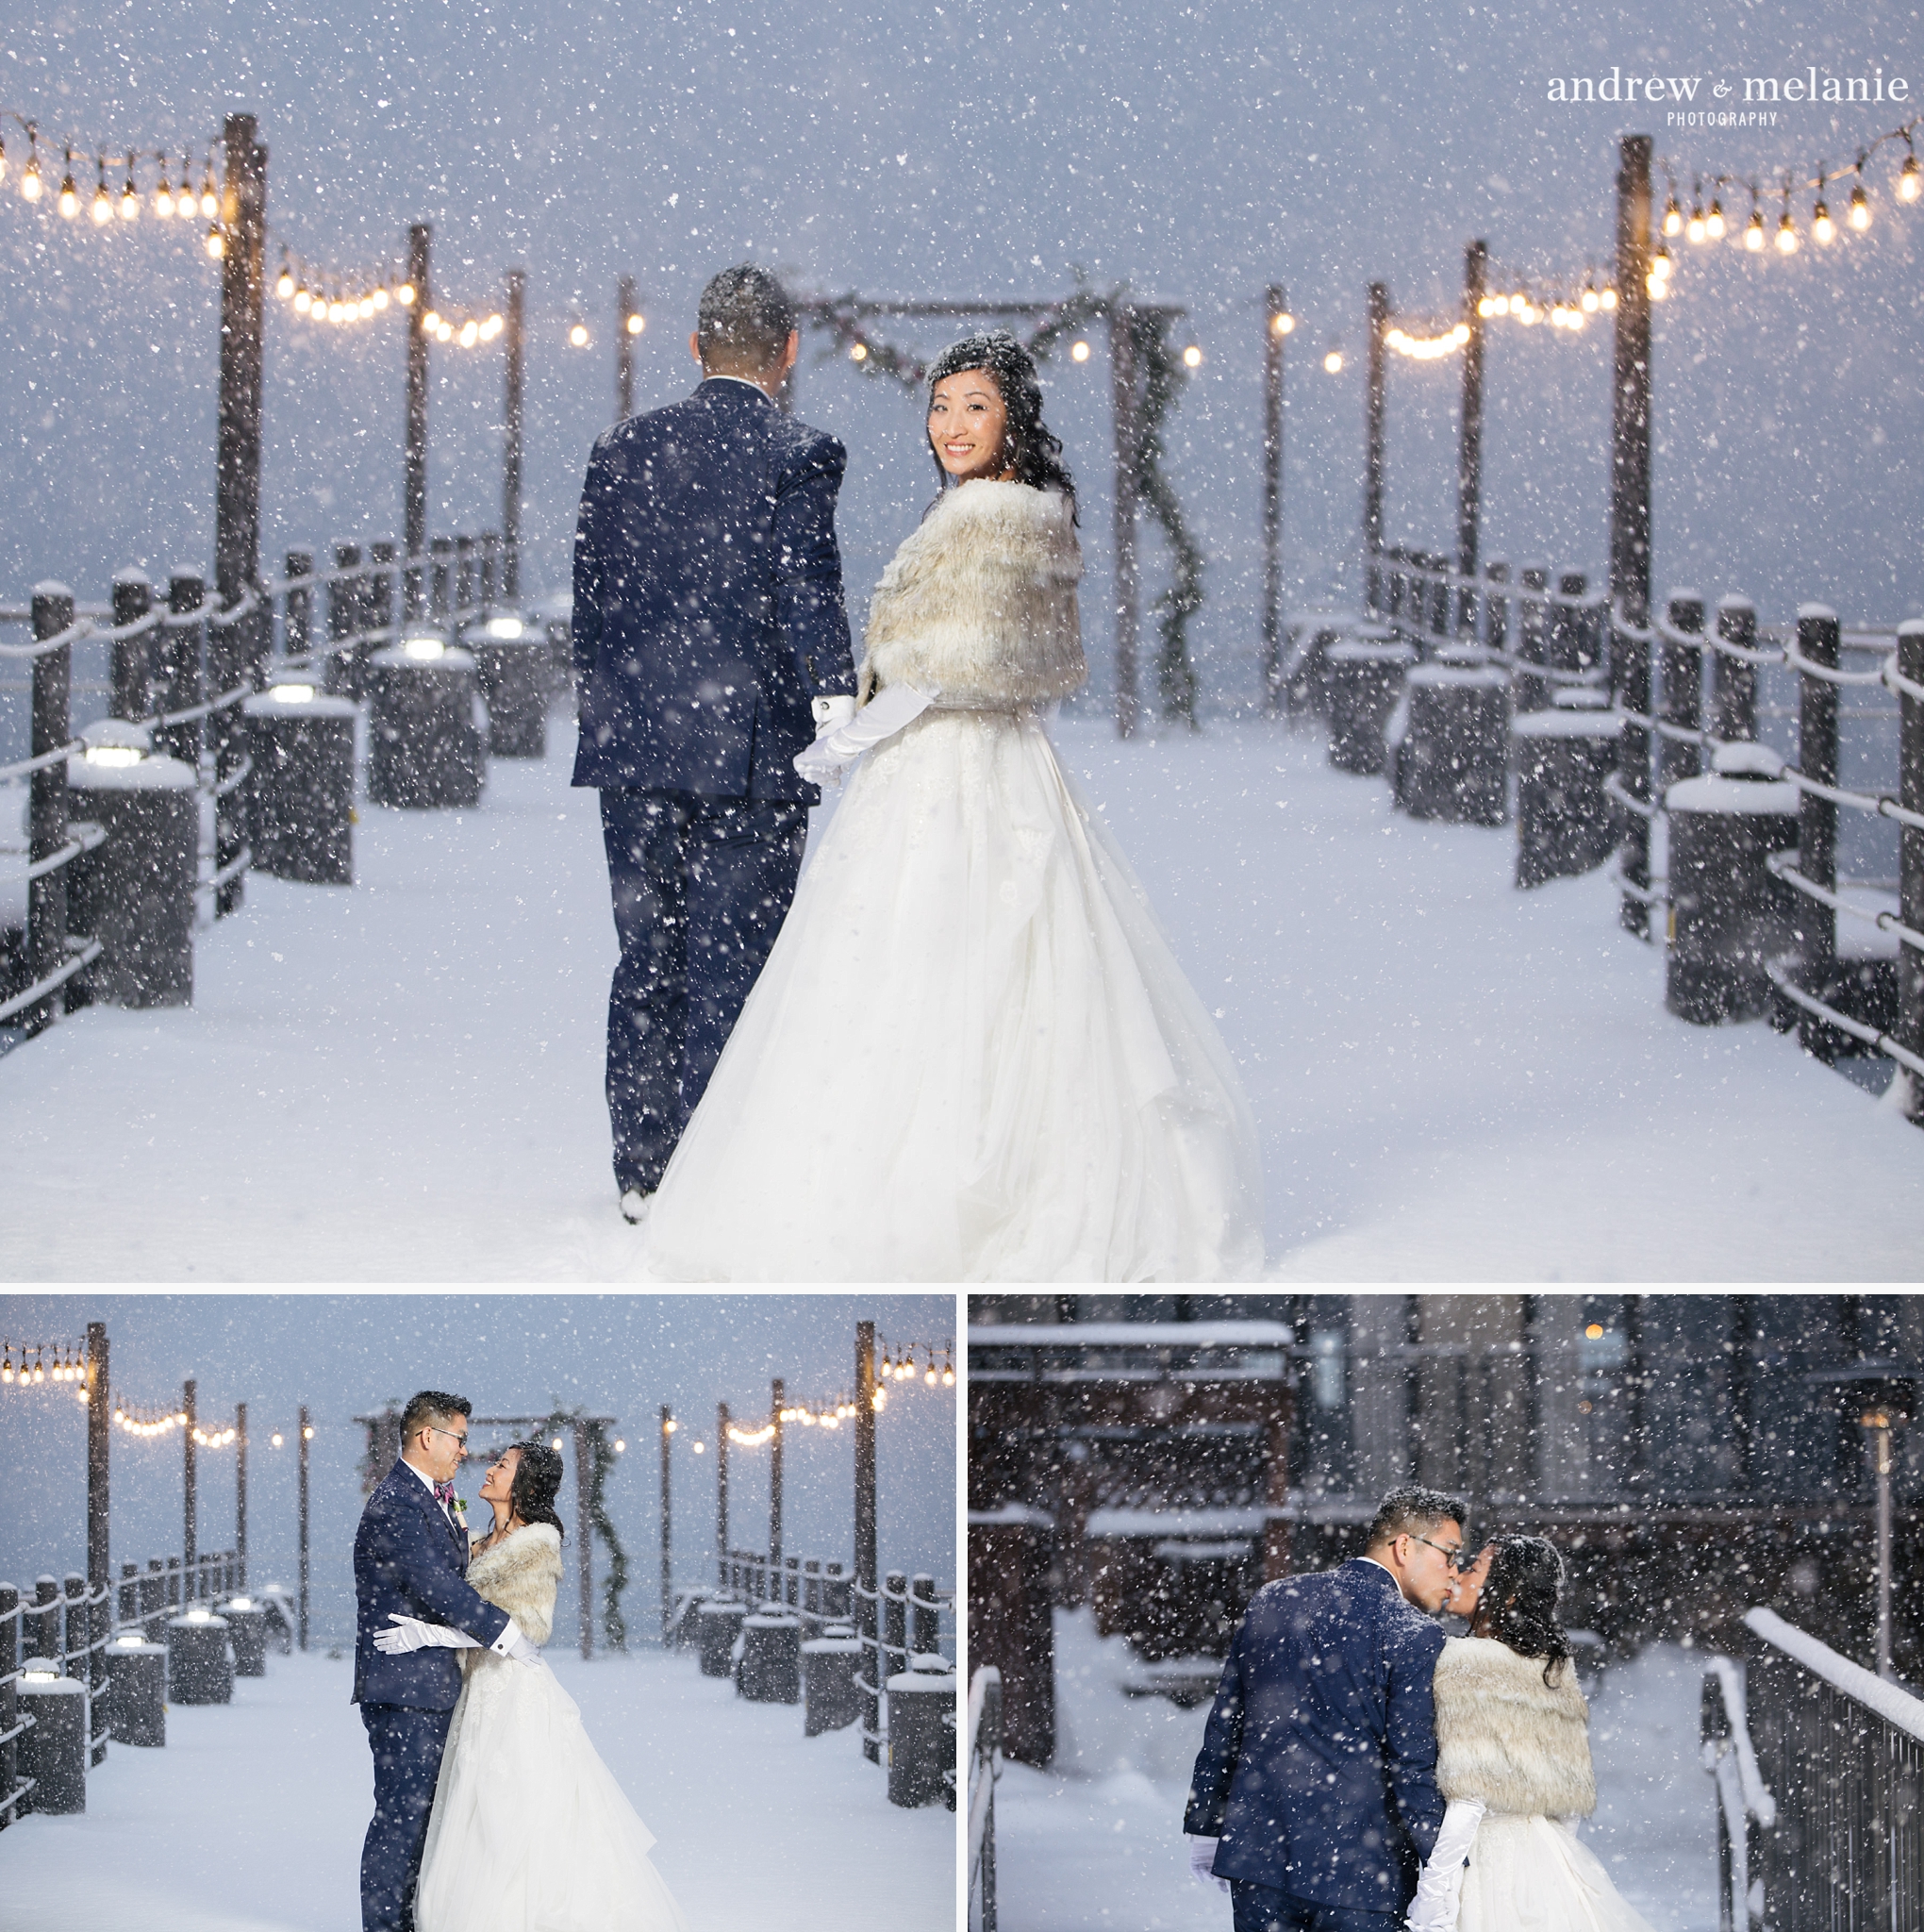 Snowy wedding photos Lake Tahoe, Ca West Shore Cafe Pier